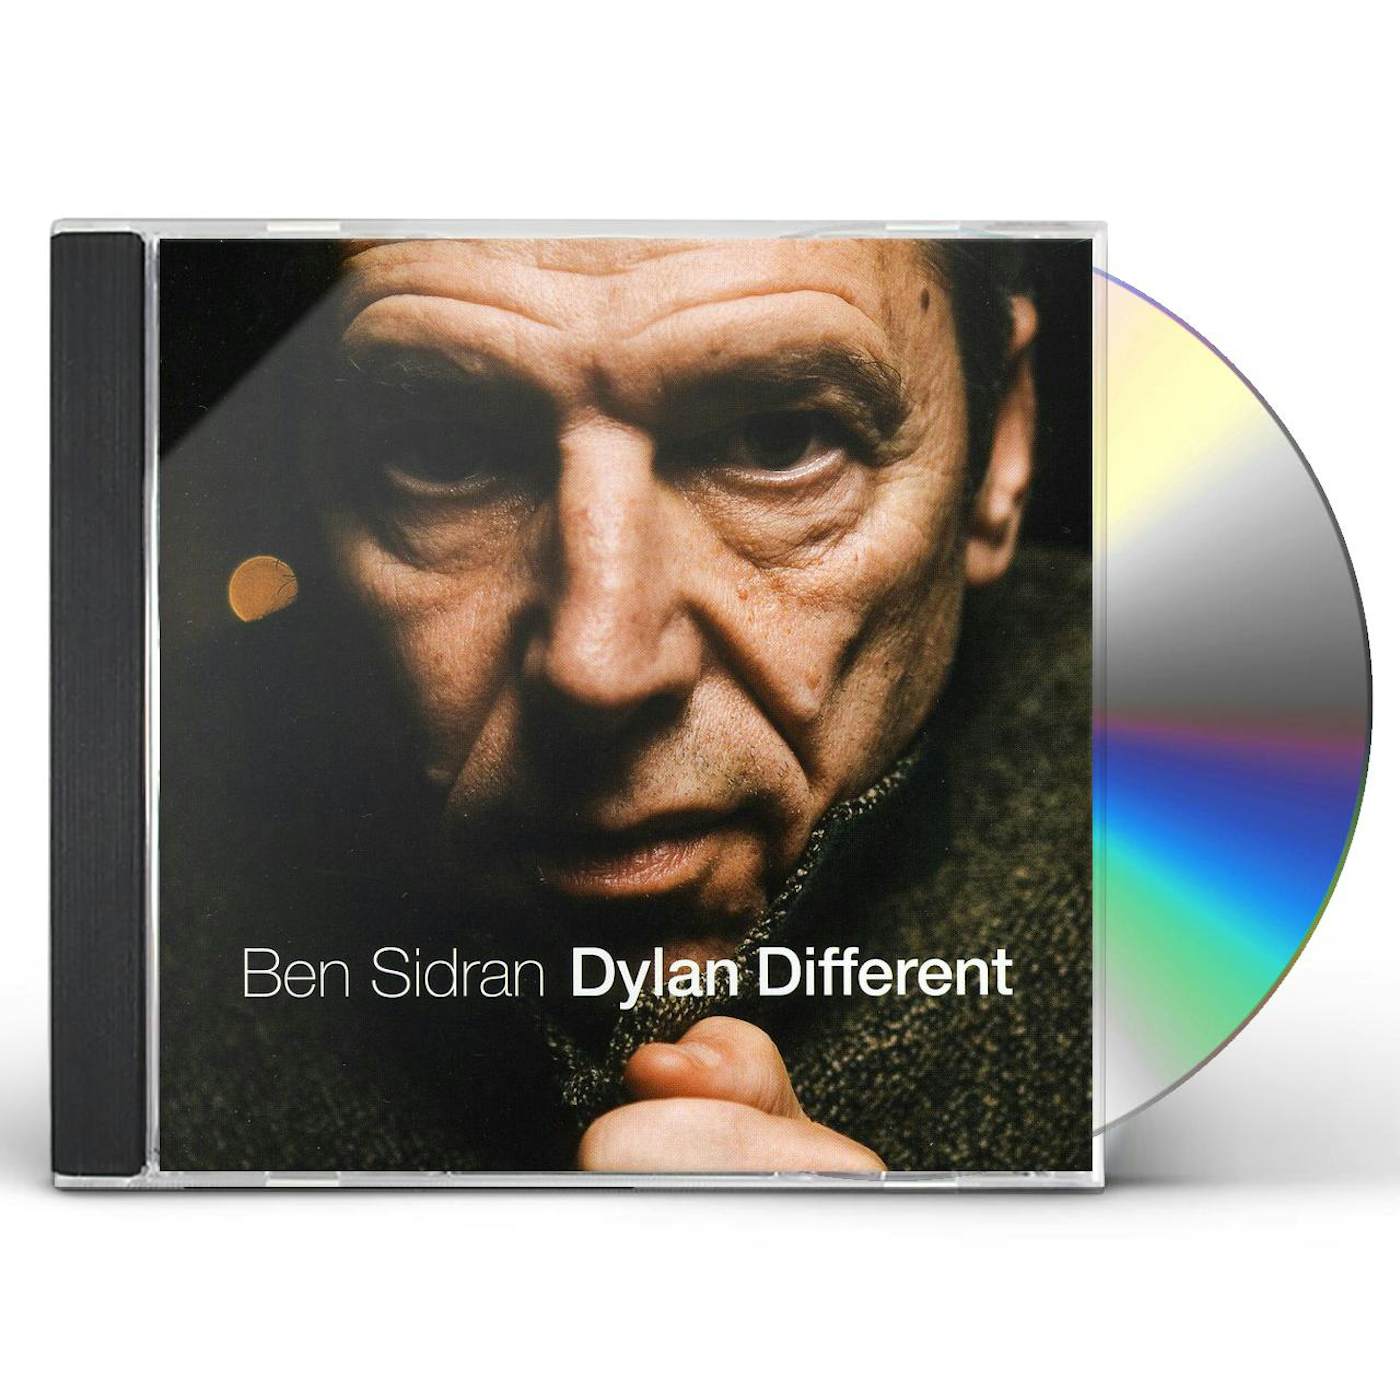 Ben Sidran DYLAN DIFFERENT CD